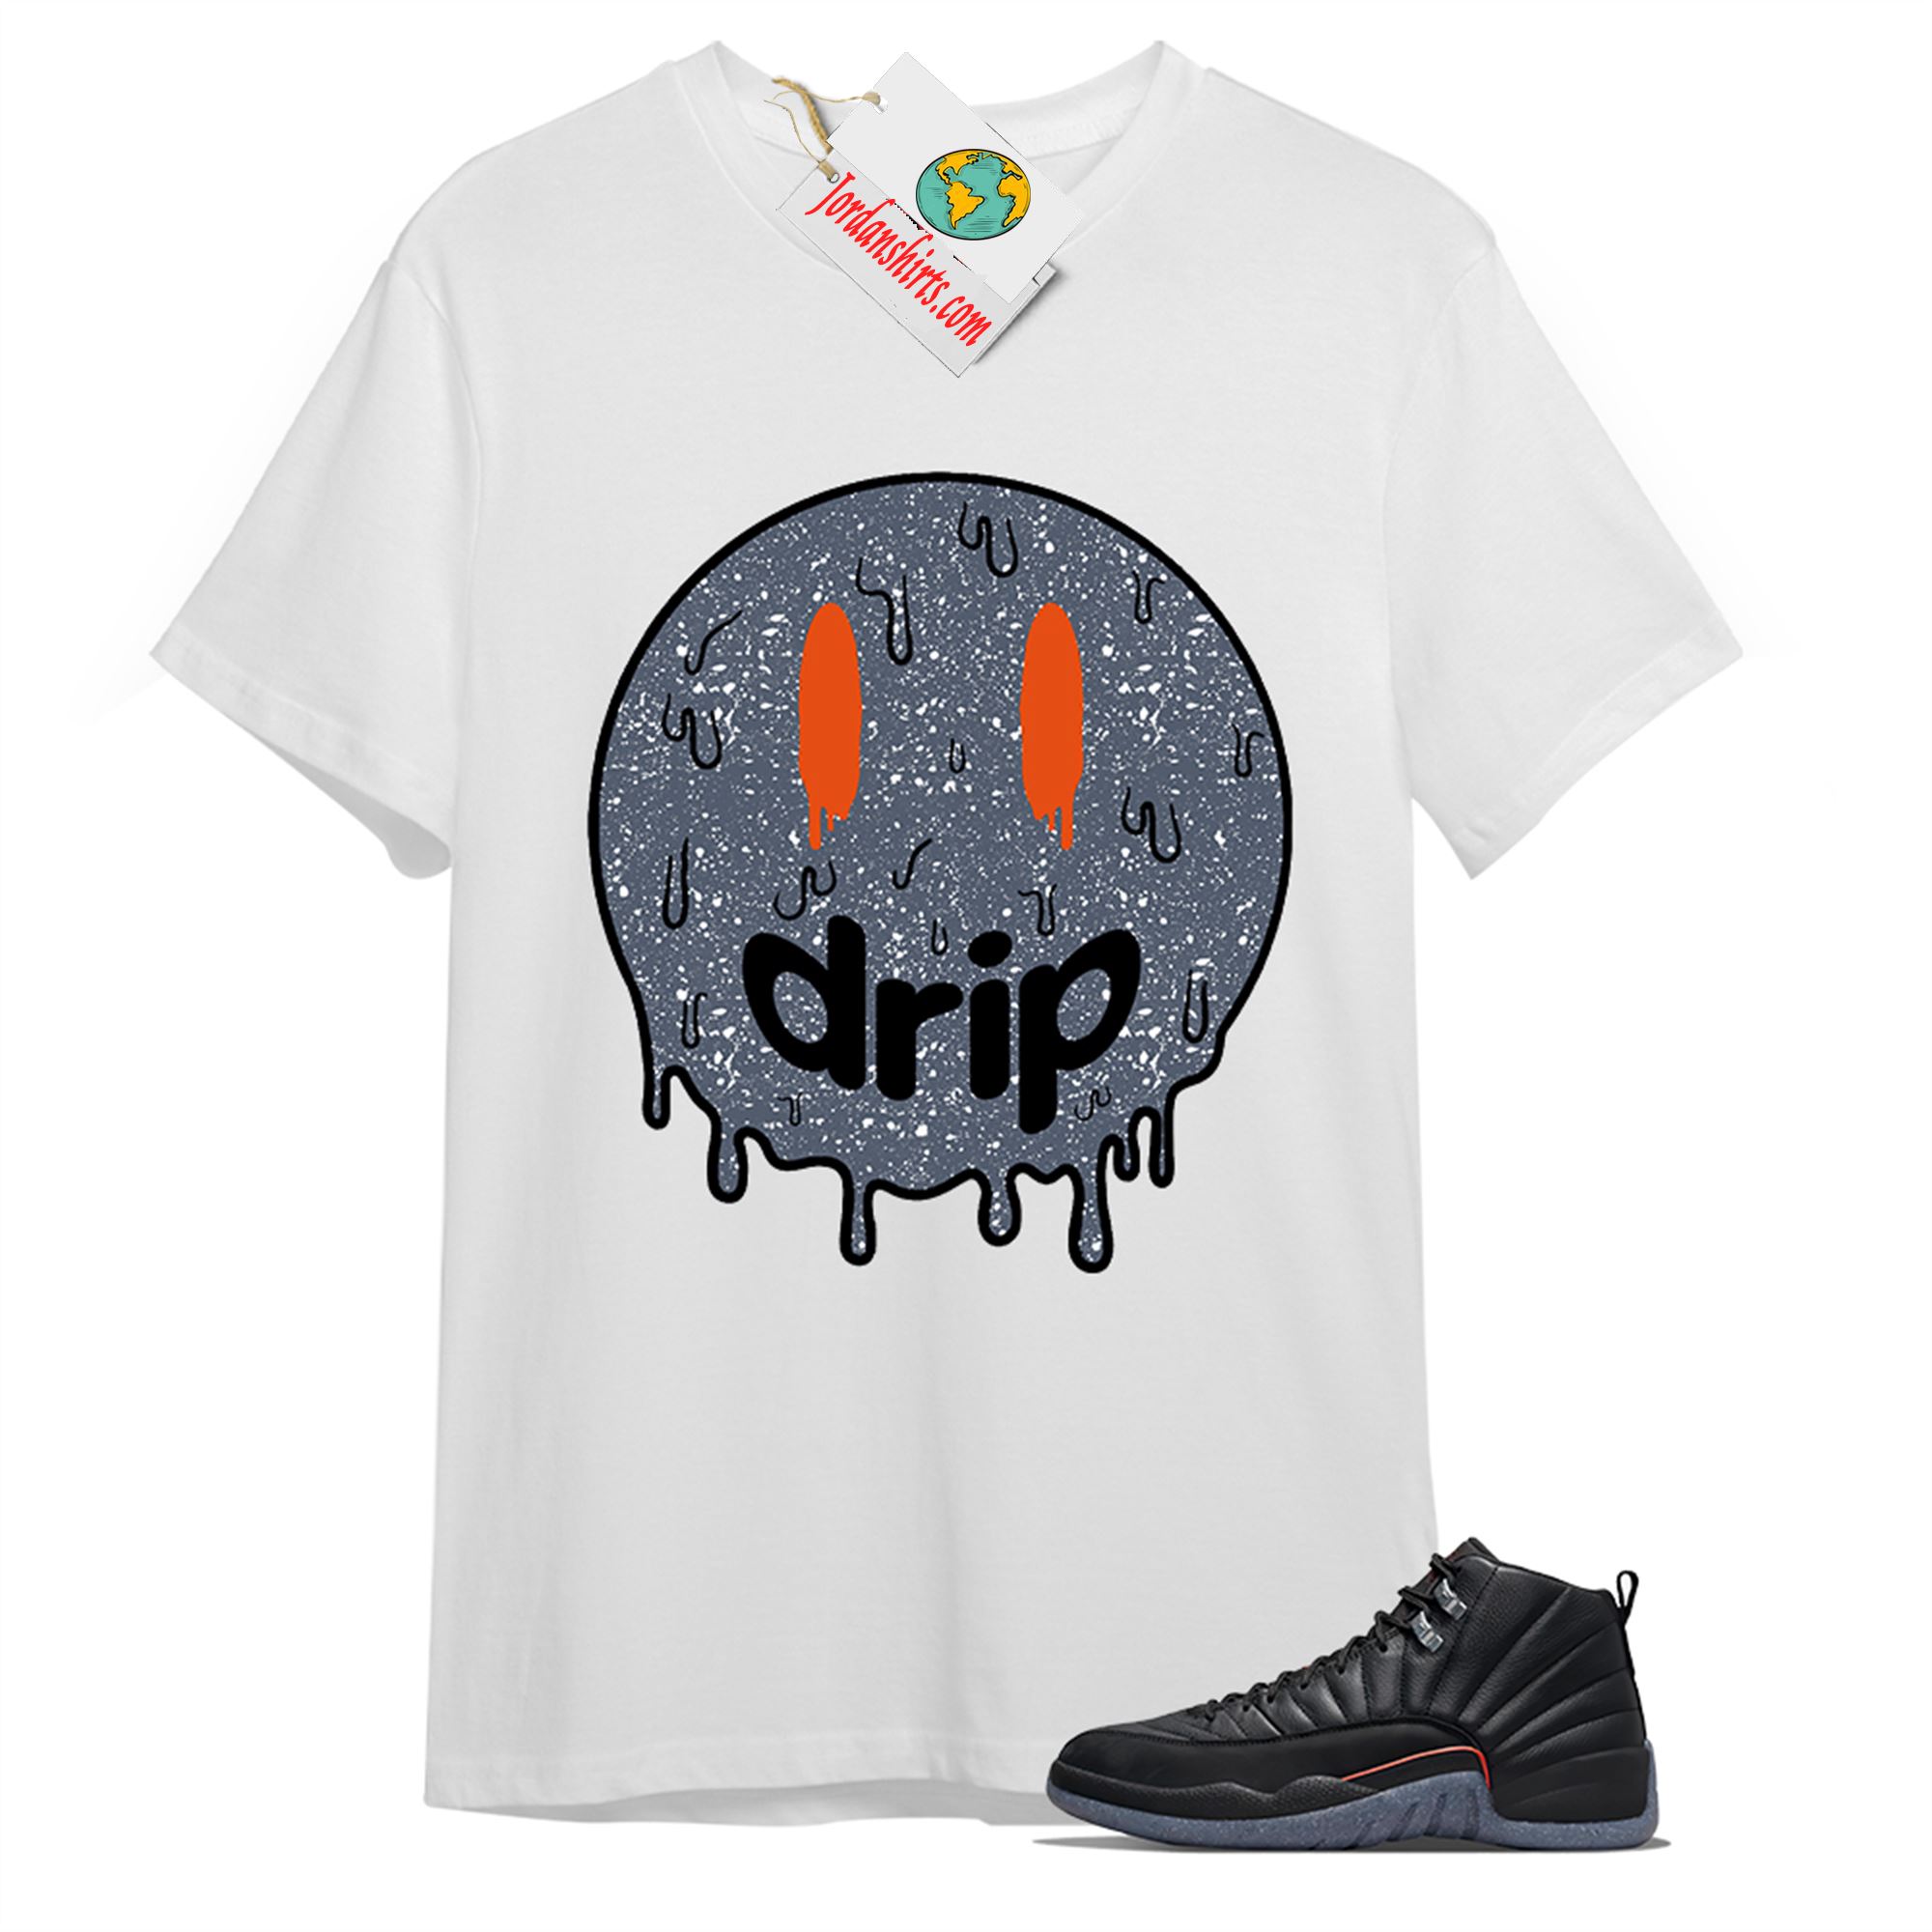 Jordan 12 Shirt, Drip White T-shirt Air Jordan 12 Utility Grind 12s Full Size Up To 5xl